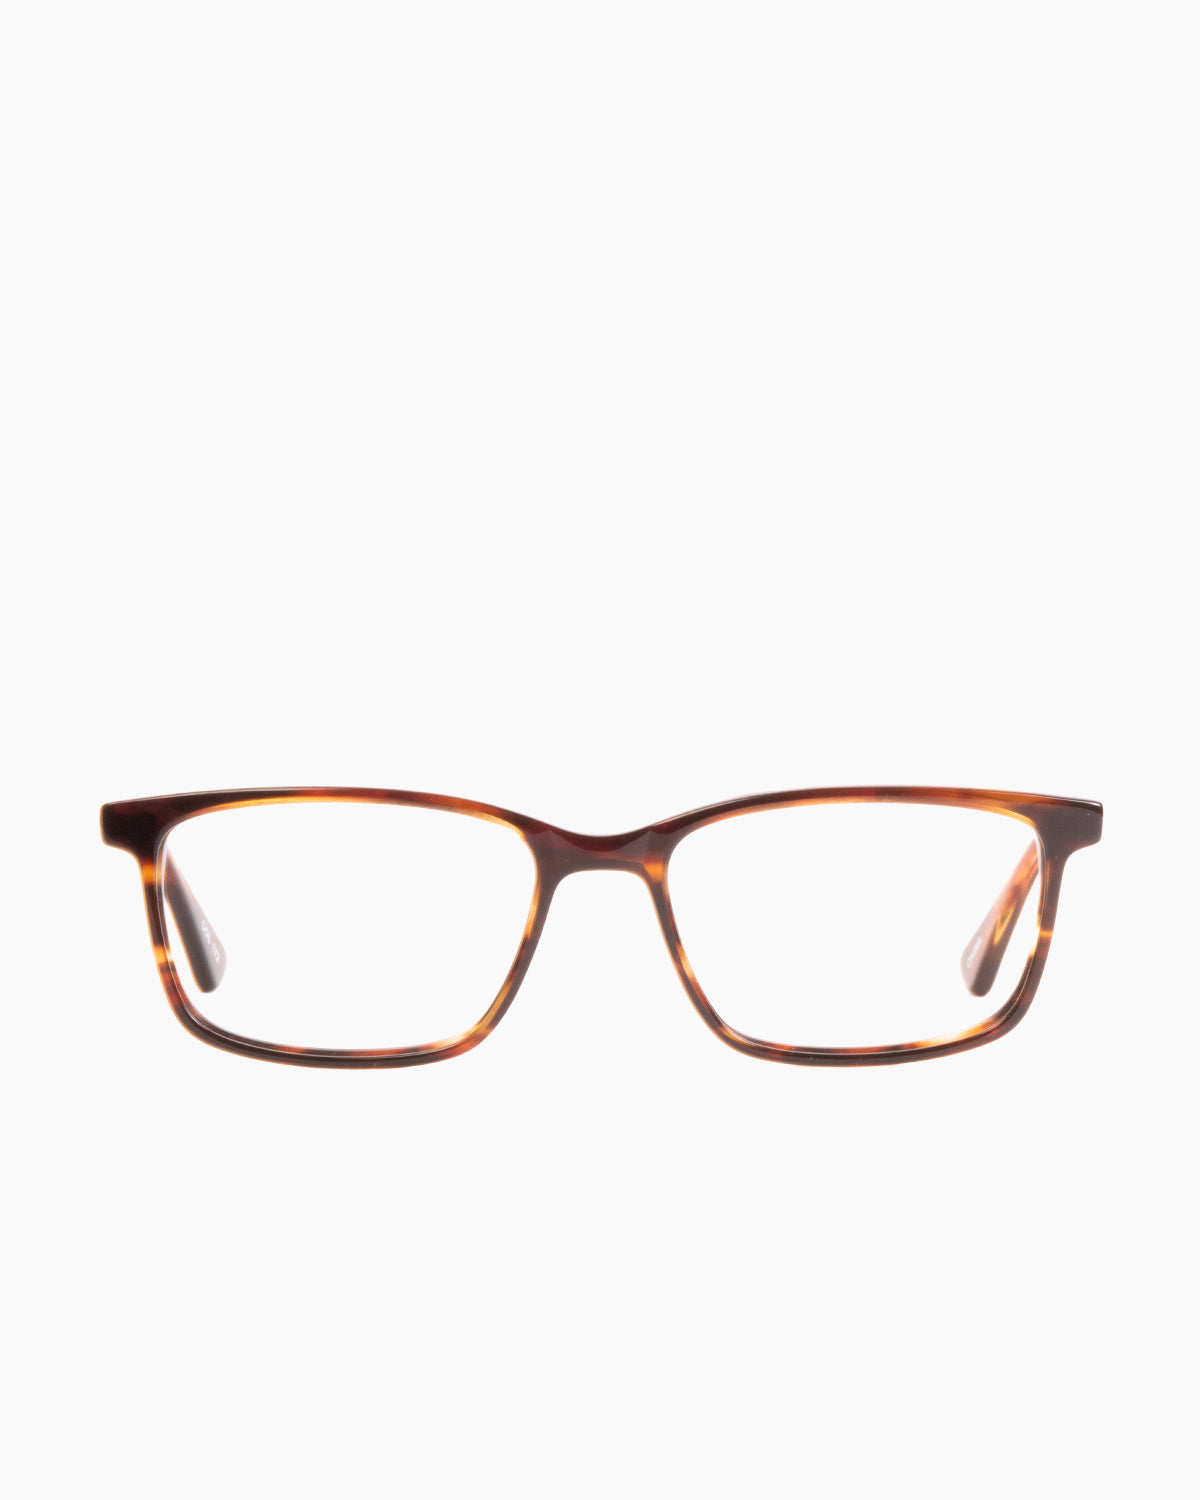 Evolve - Carter - 172 | glasses bar